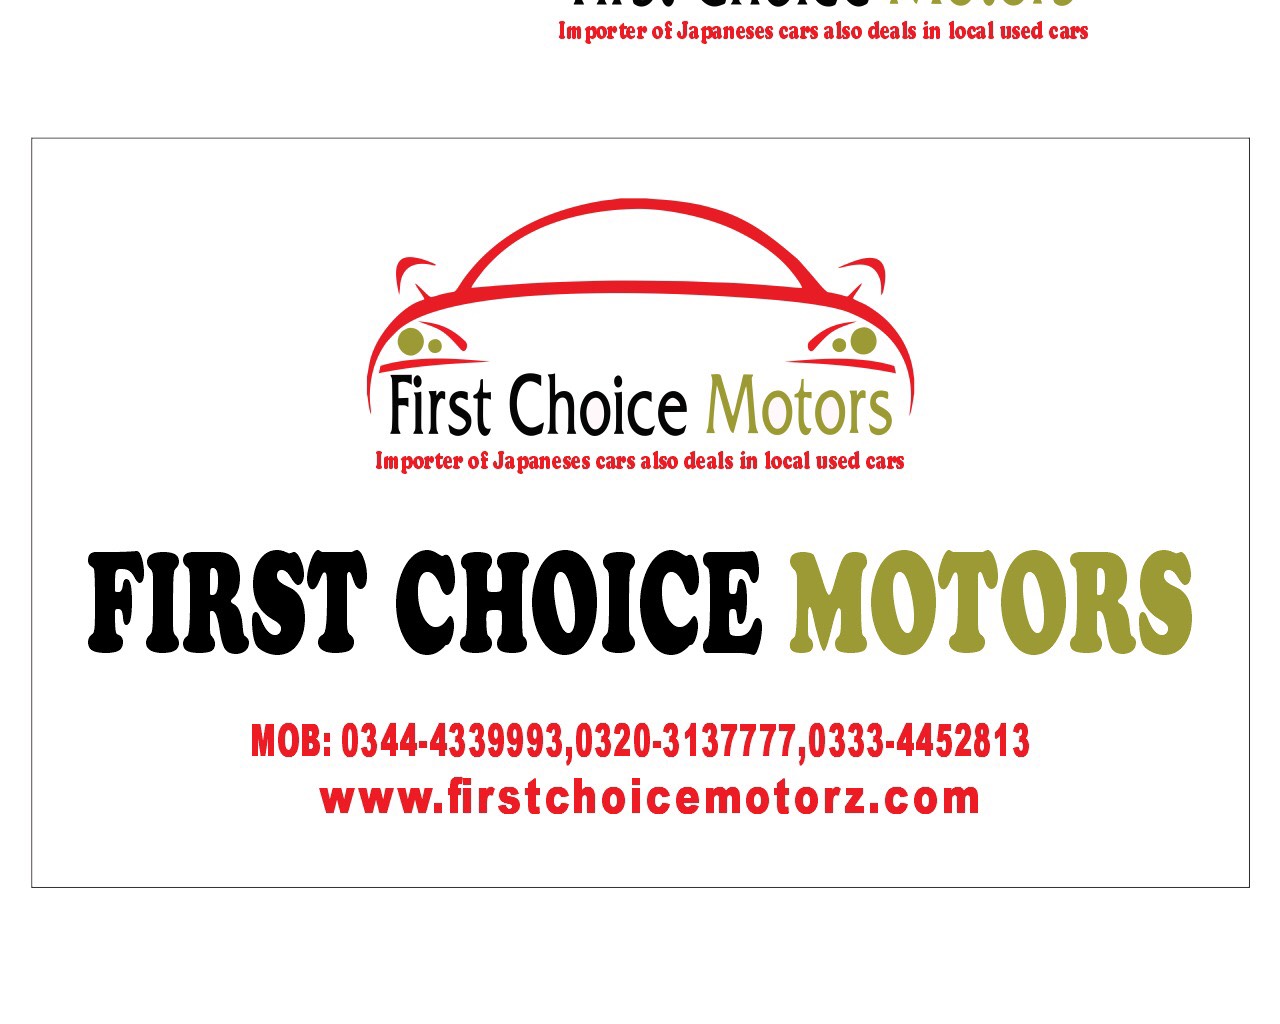 First Choice Motors